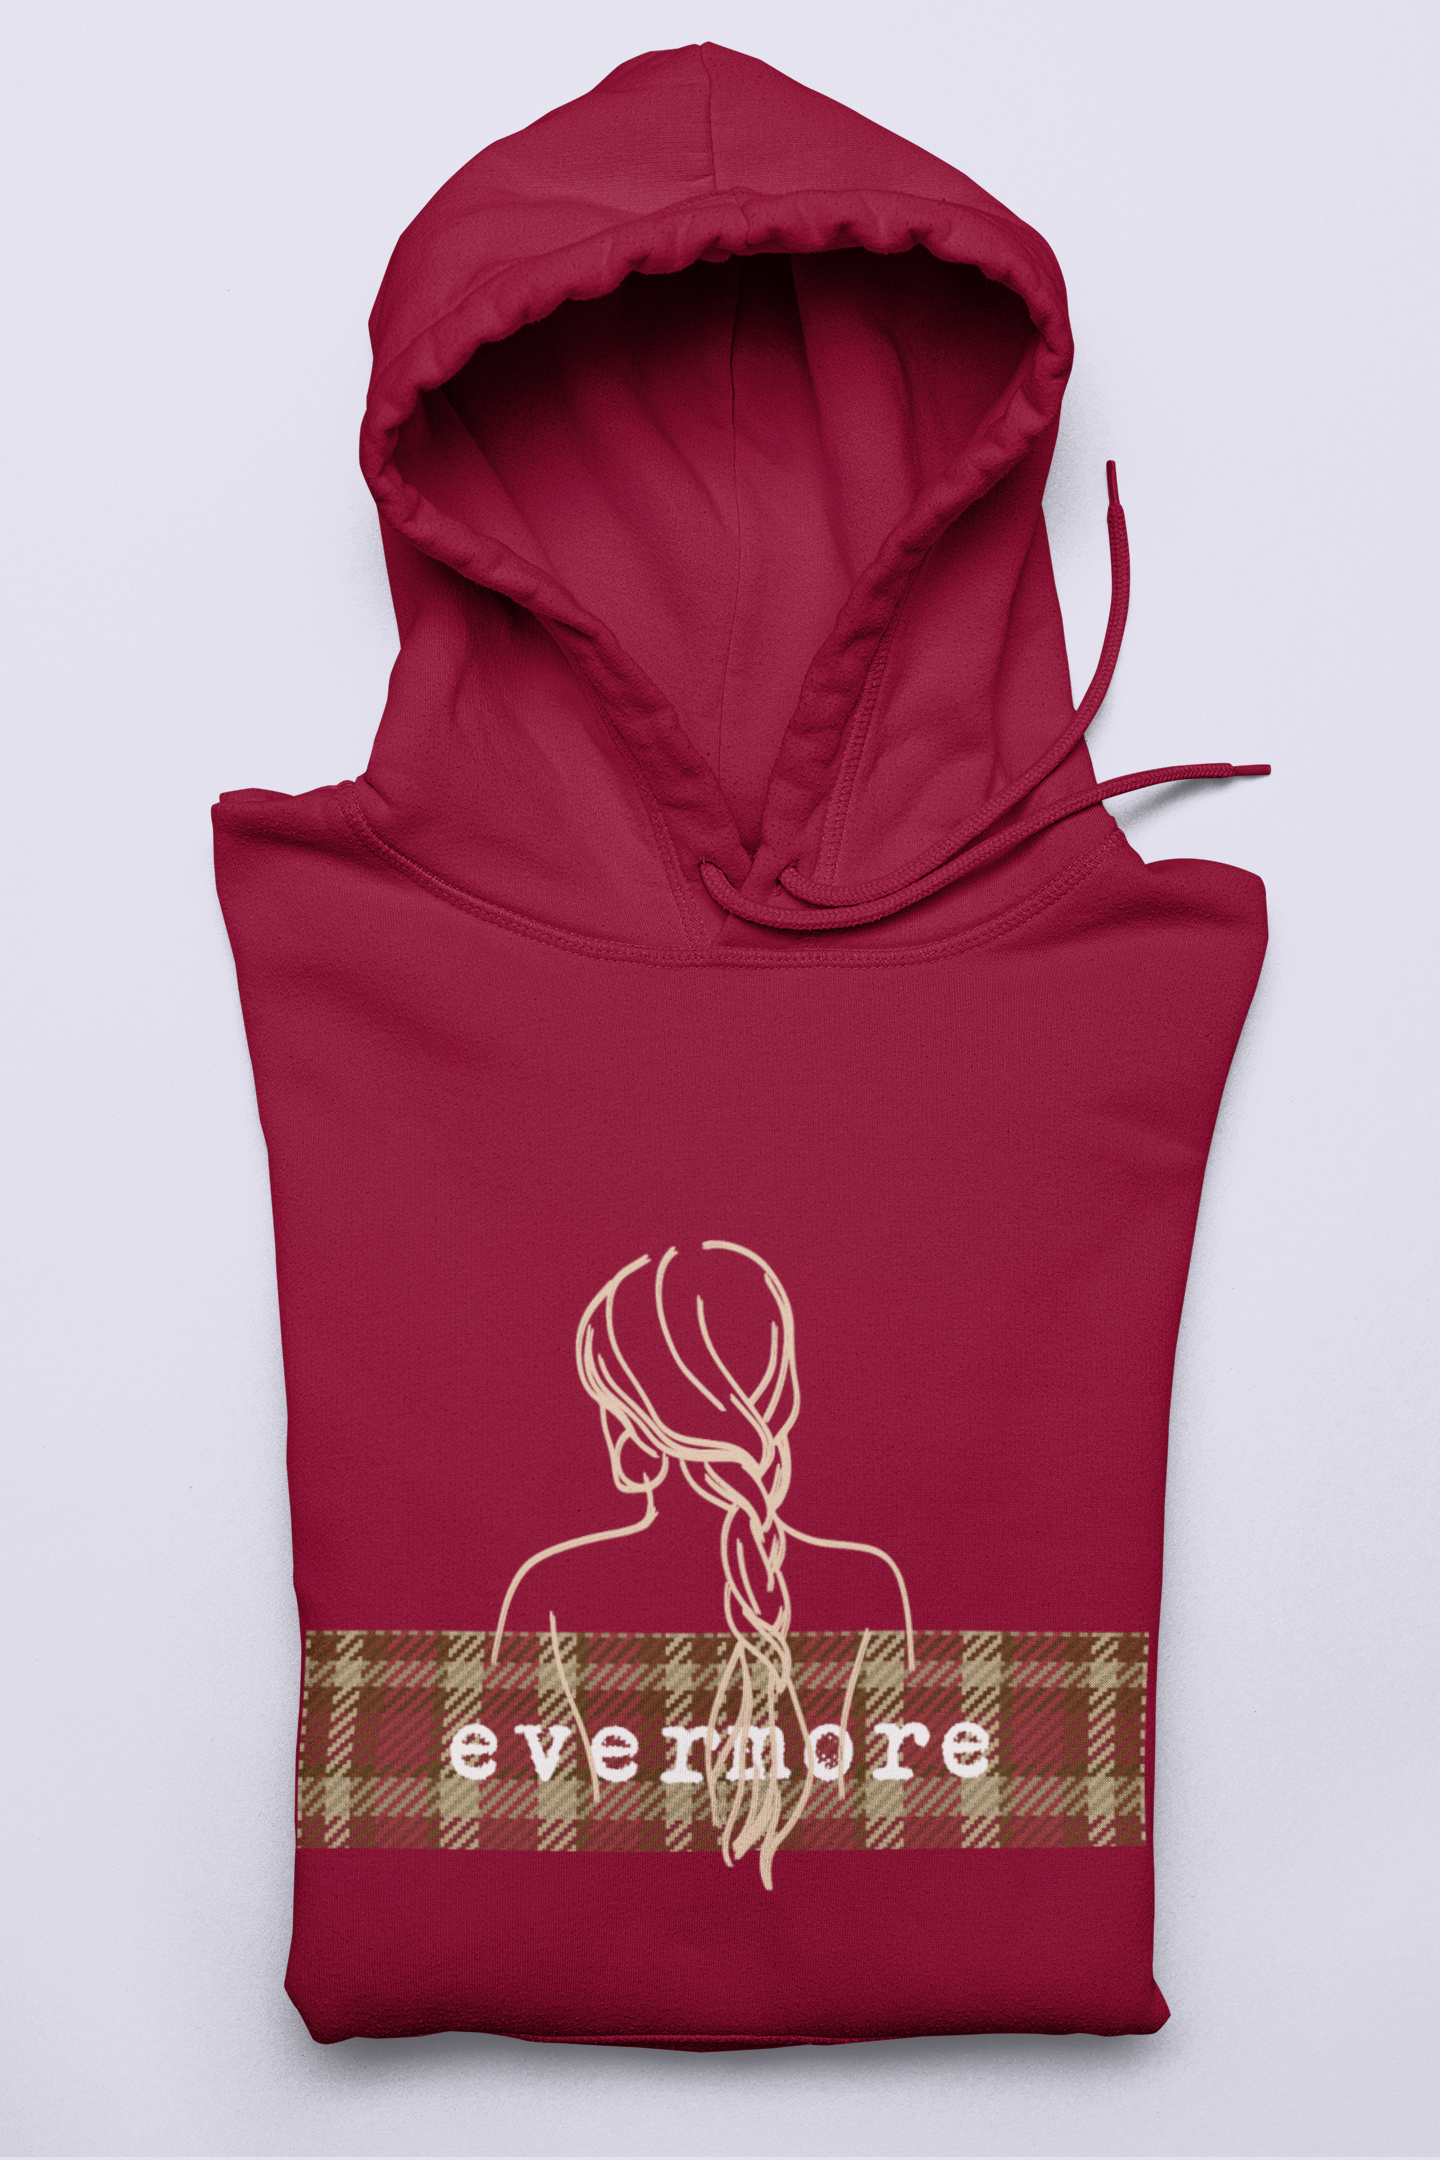 Evermore | Taylor Swift | Premium Unisex Winter Hoodie